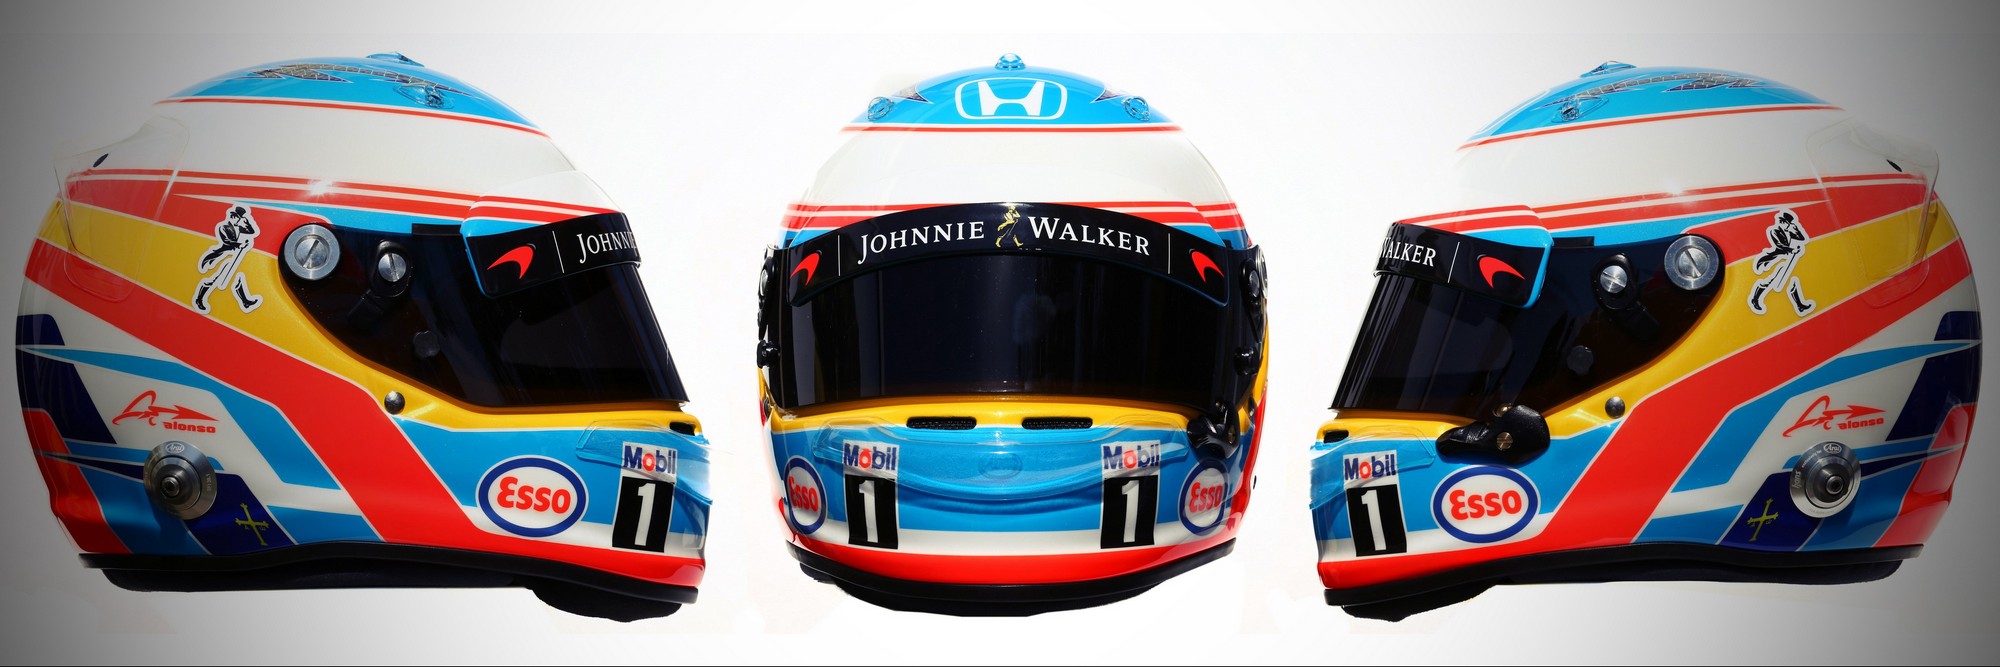 Шлем Фернандо Алонсо на сезон 2016 года | 2016 helmet of Fernando Alonso